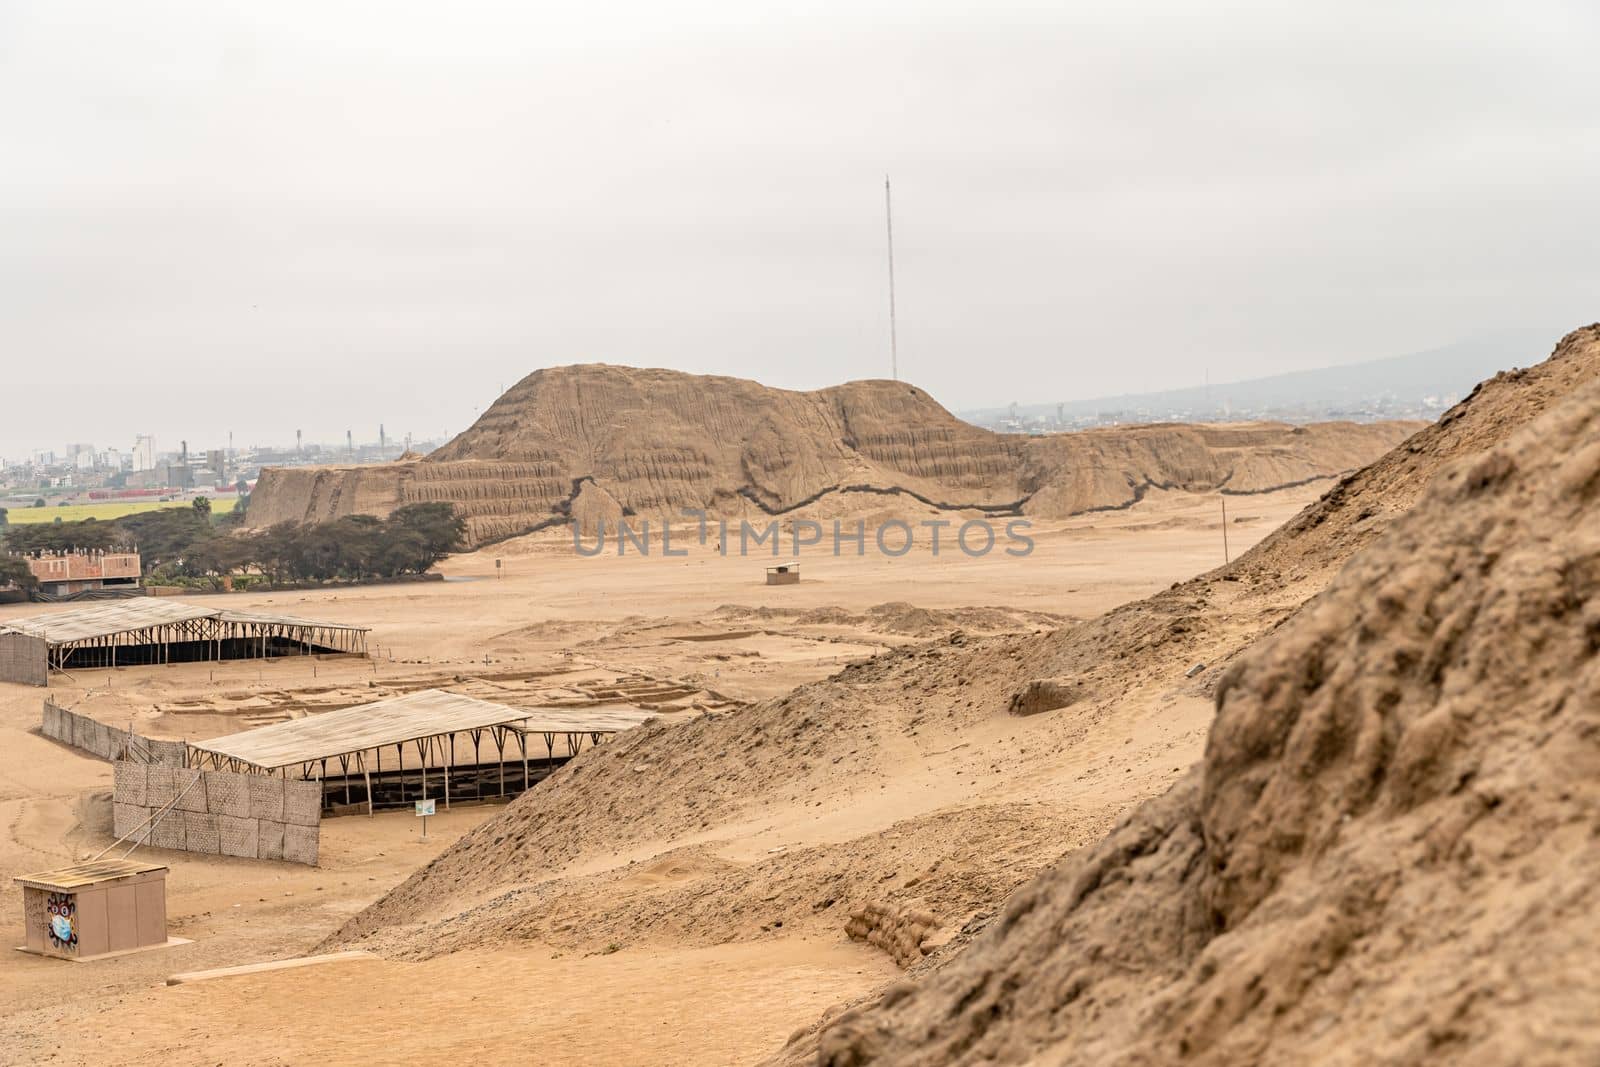 Huaca de la Luna archaeological site in Peru near Trujillo by Edophoto